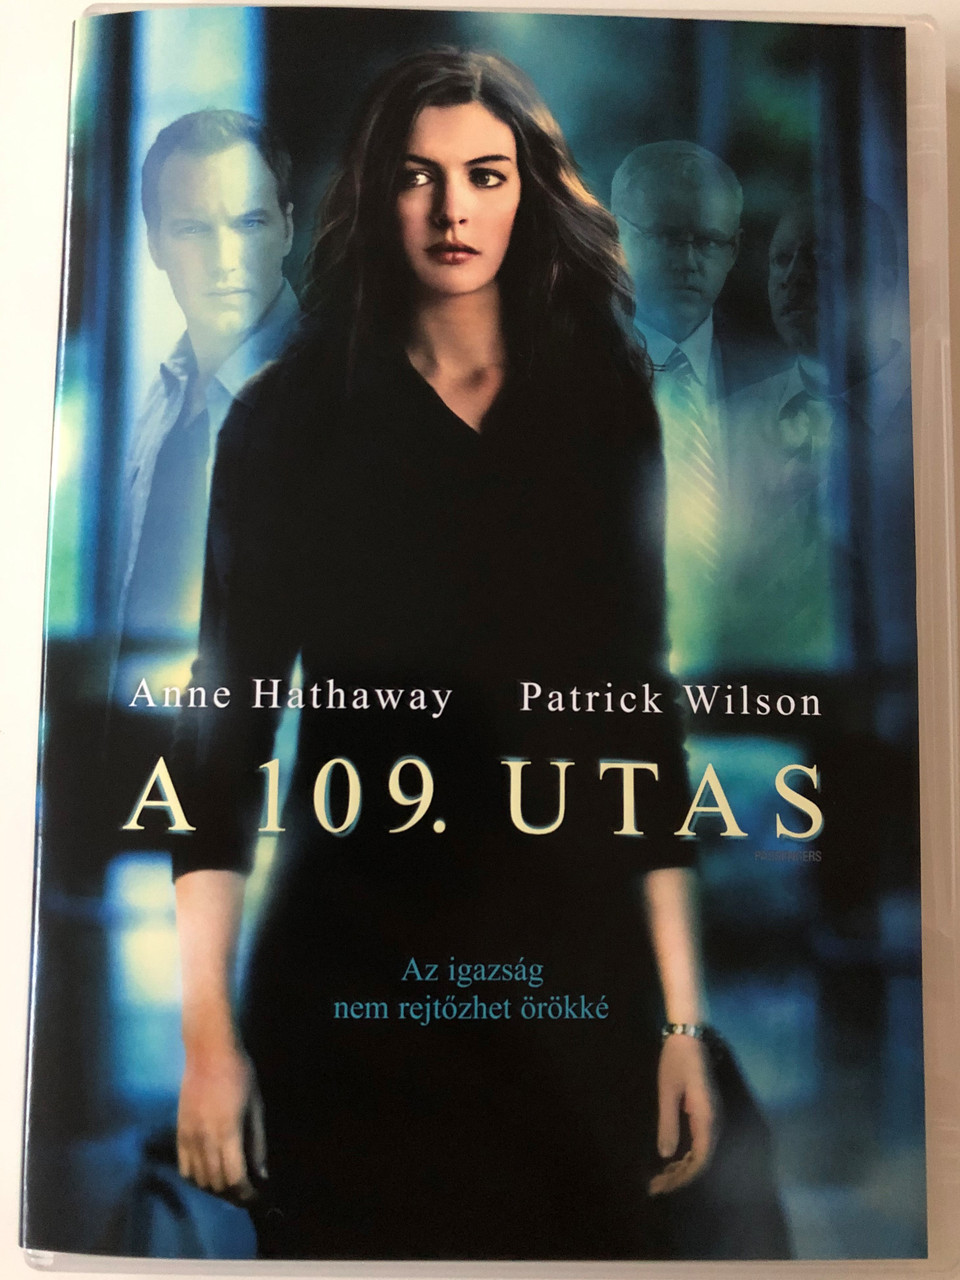 Passengers DVD 2008 A 109. utas / Directed by Rodrigo Garcia / Starring:  Anne Hathaway, Patrick Wilson - bibleinmylanguage